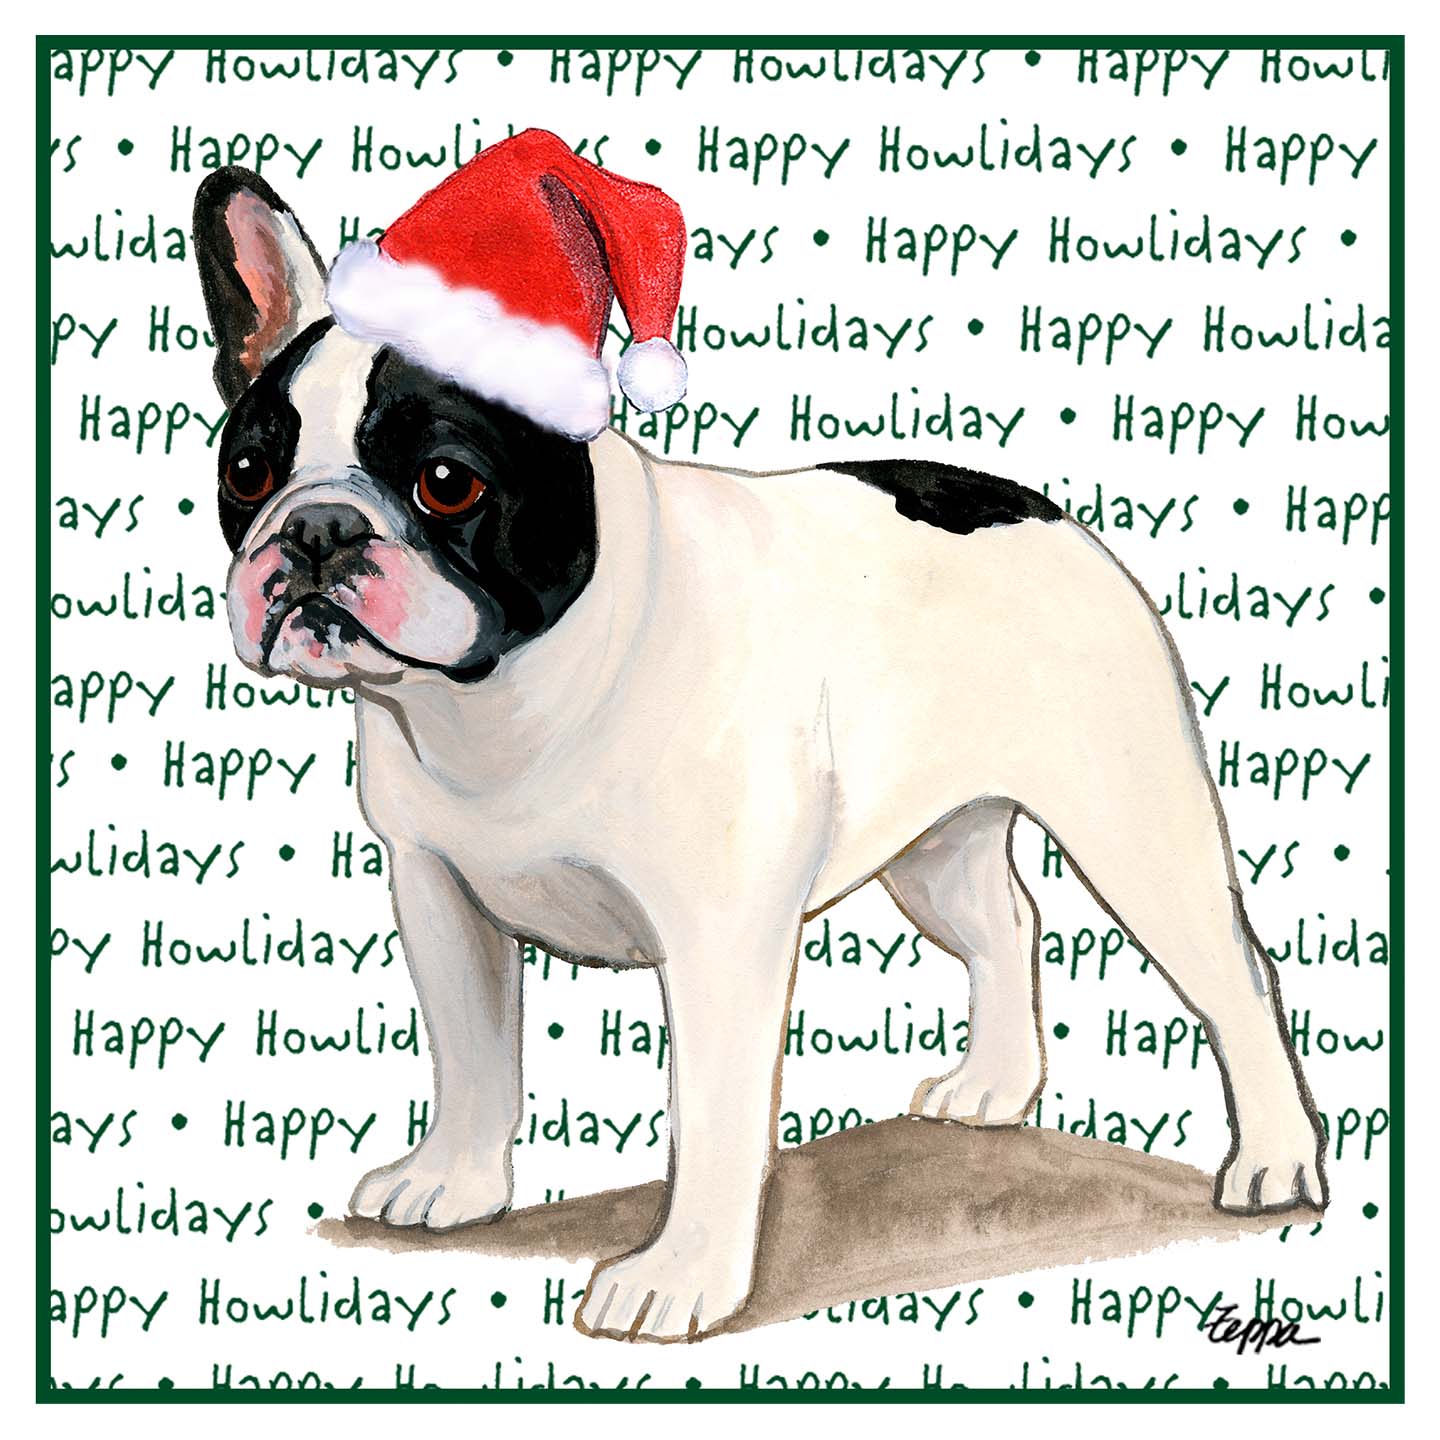 French Bulldog (Black & White) Happy Howlidays Text - Adult Unisex Hoodie Sweatshirt